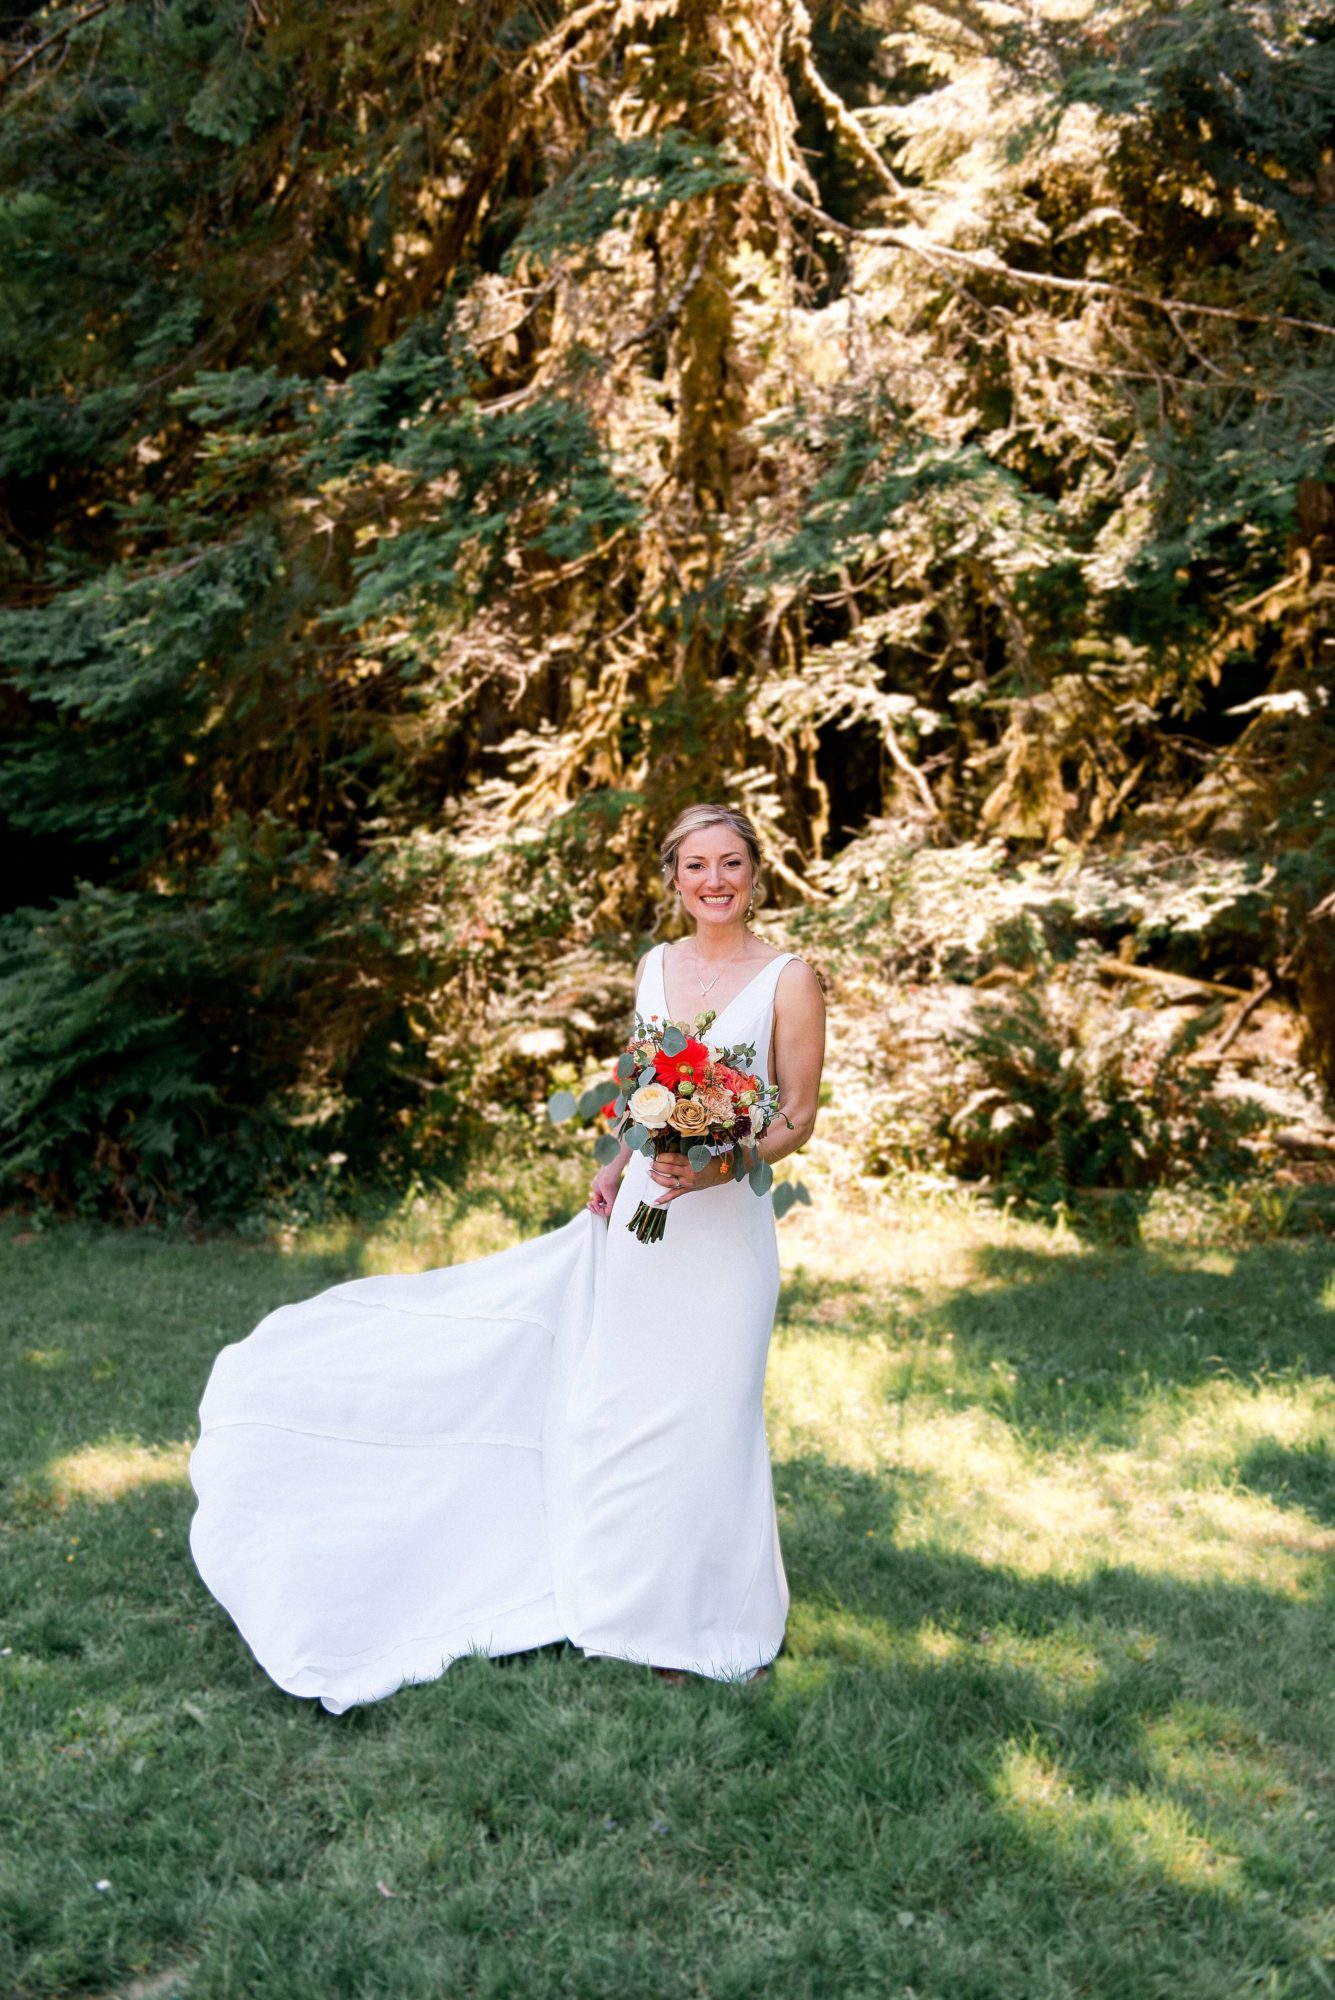 Bride twirling dress before a NatureBridge Wedding